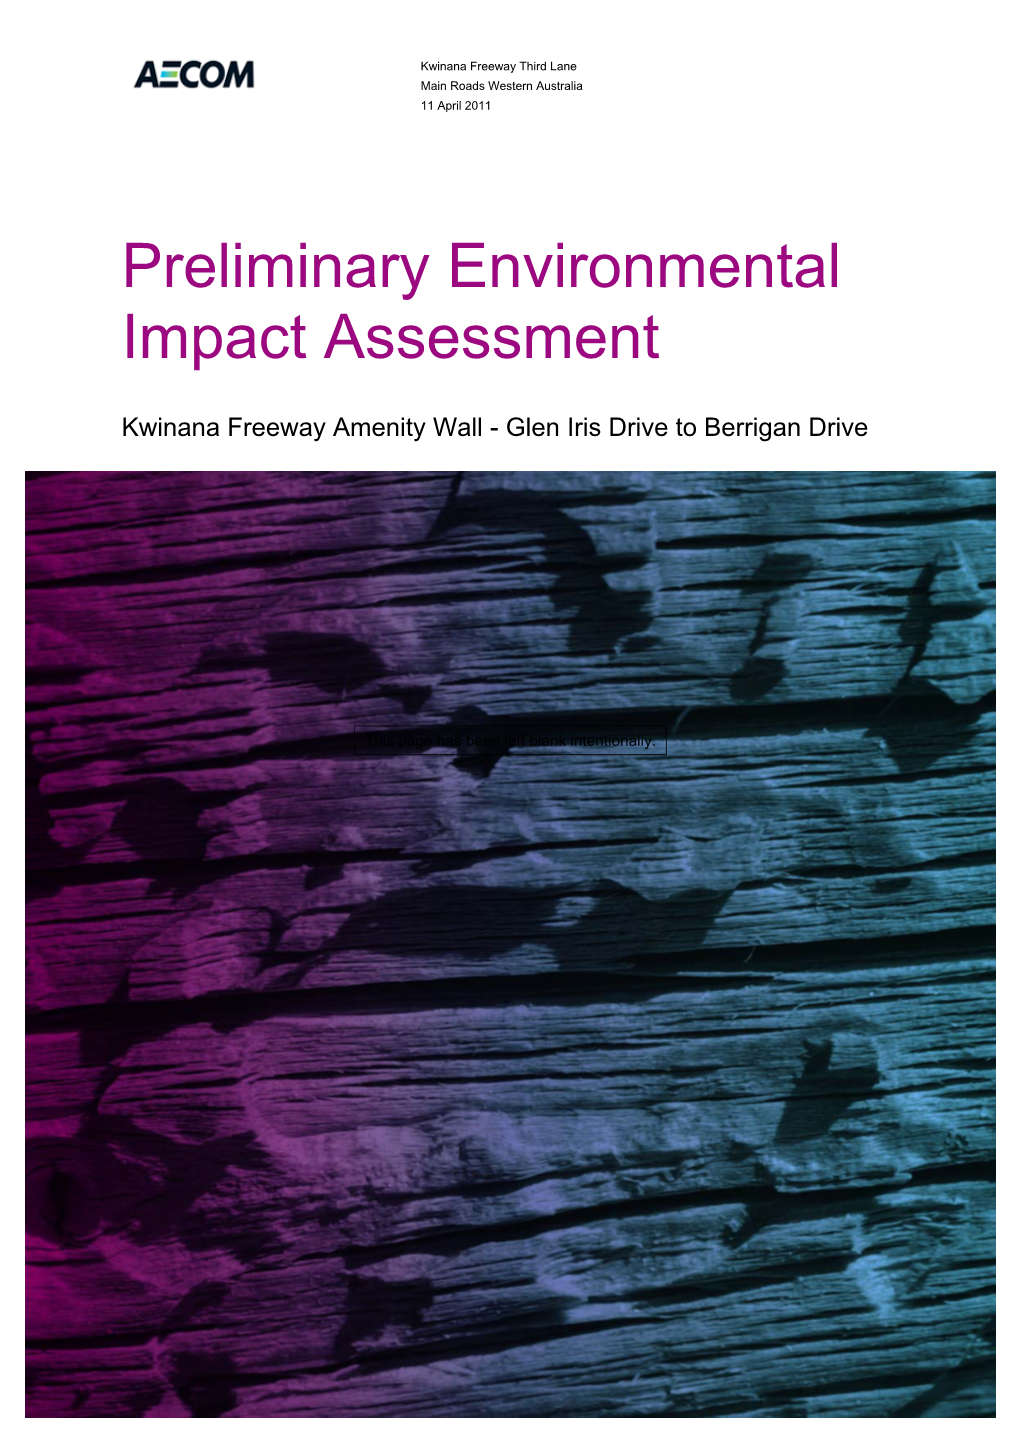 Preliminary Environmental Impact Assessment (PEIA)